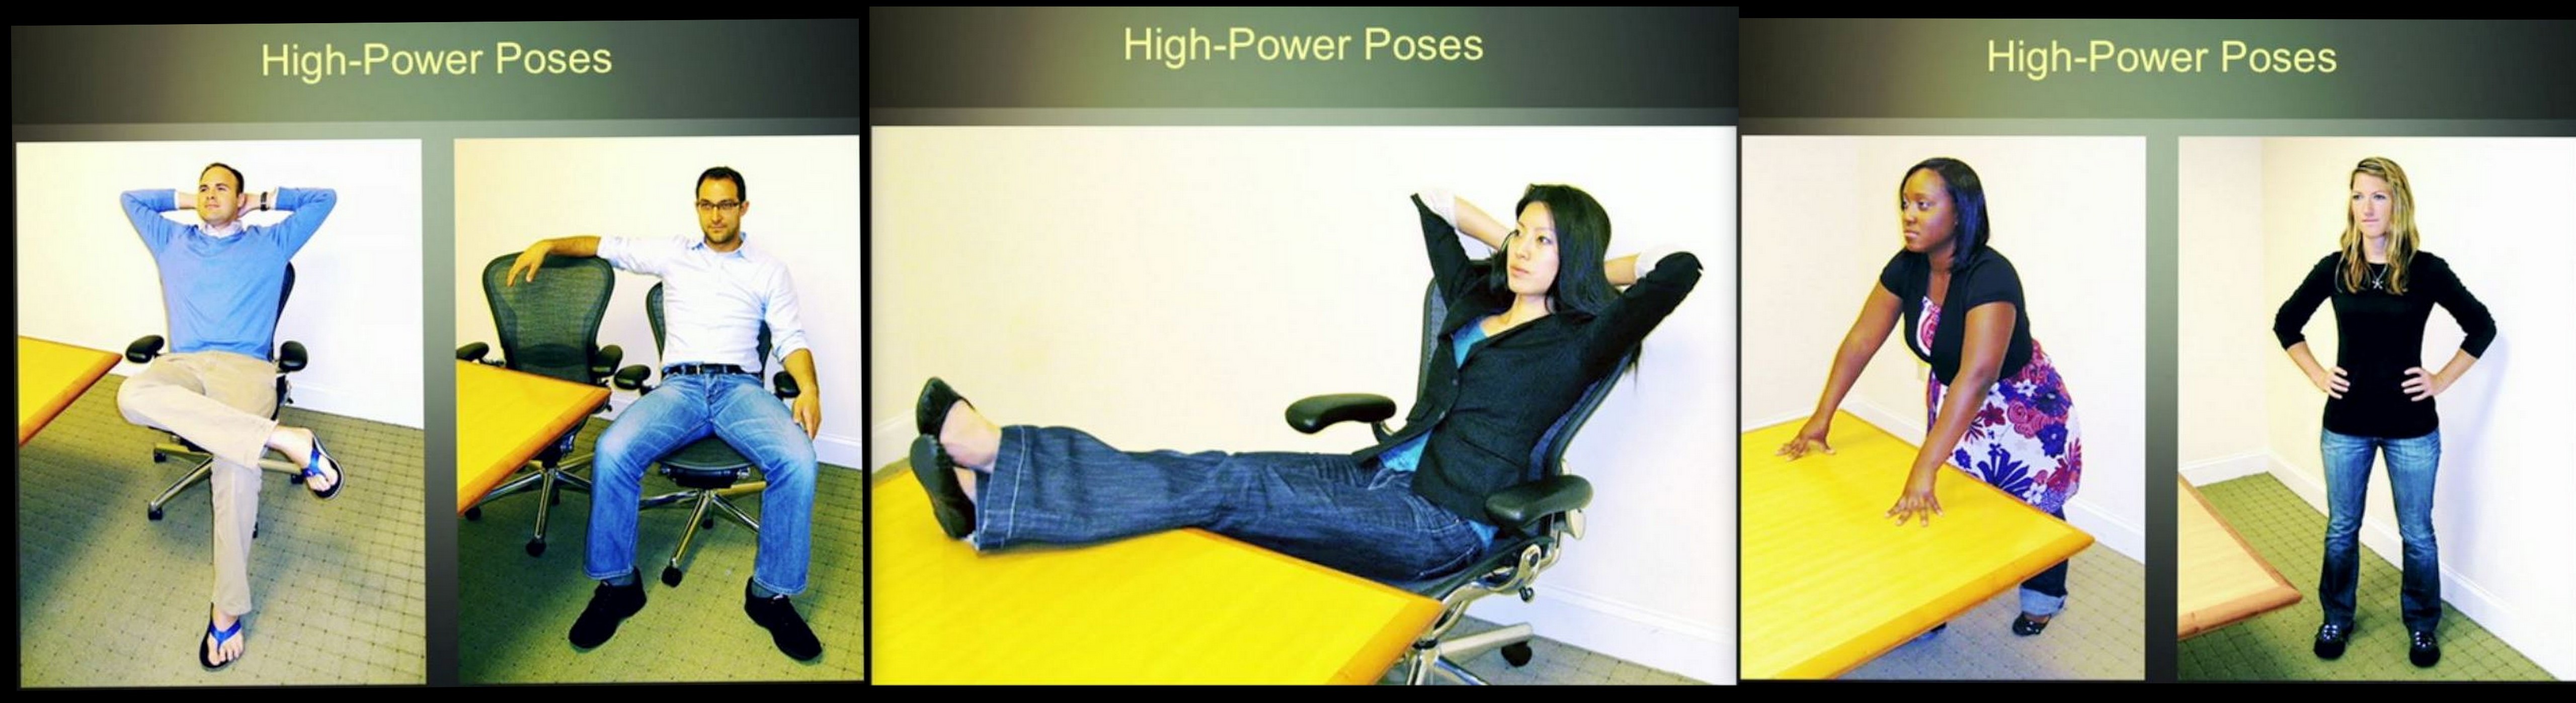 high power pose.